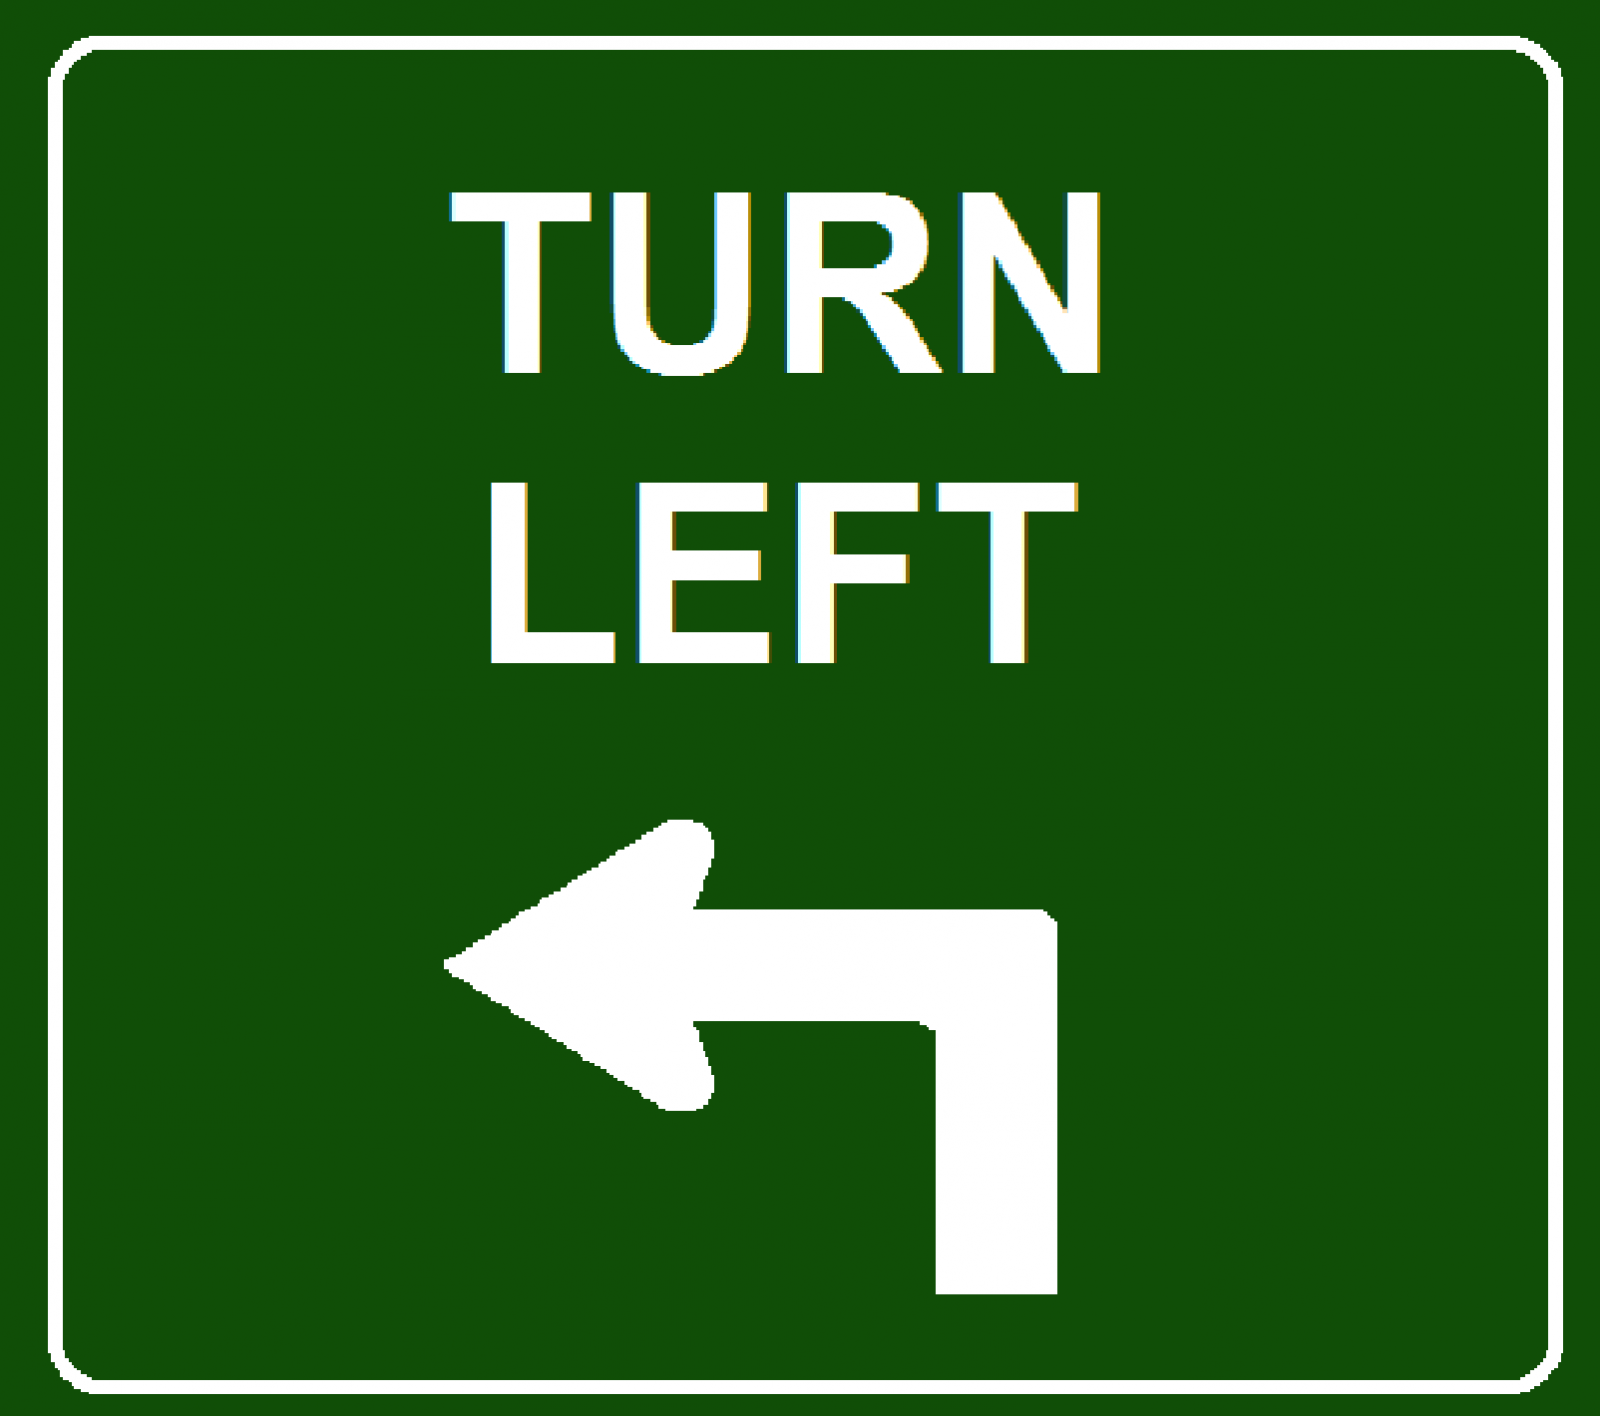 Good left good right. Turn left. Turn left картинка. Turn left turn right. Реклама turn turn turn turn.